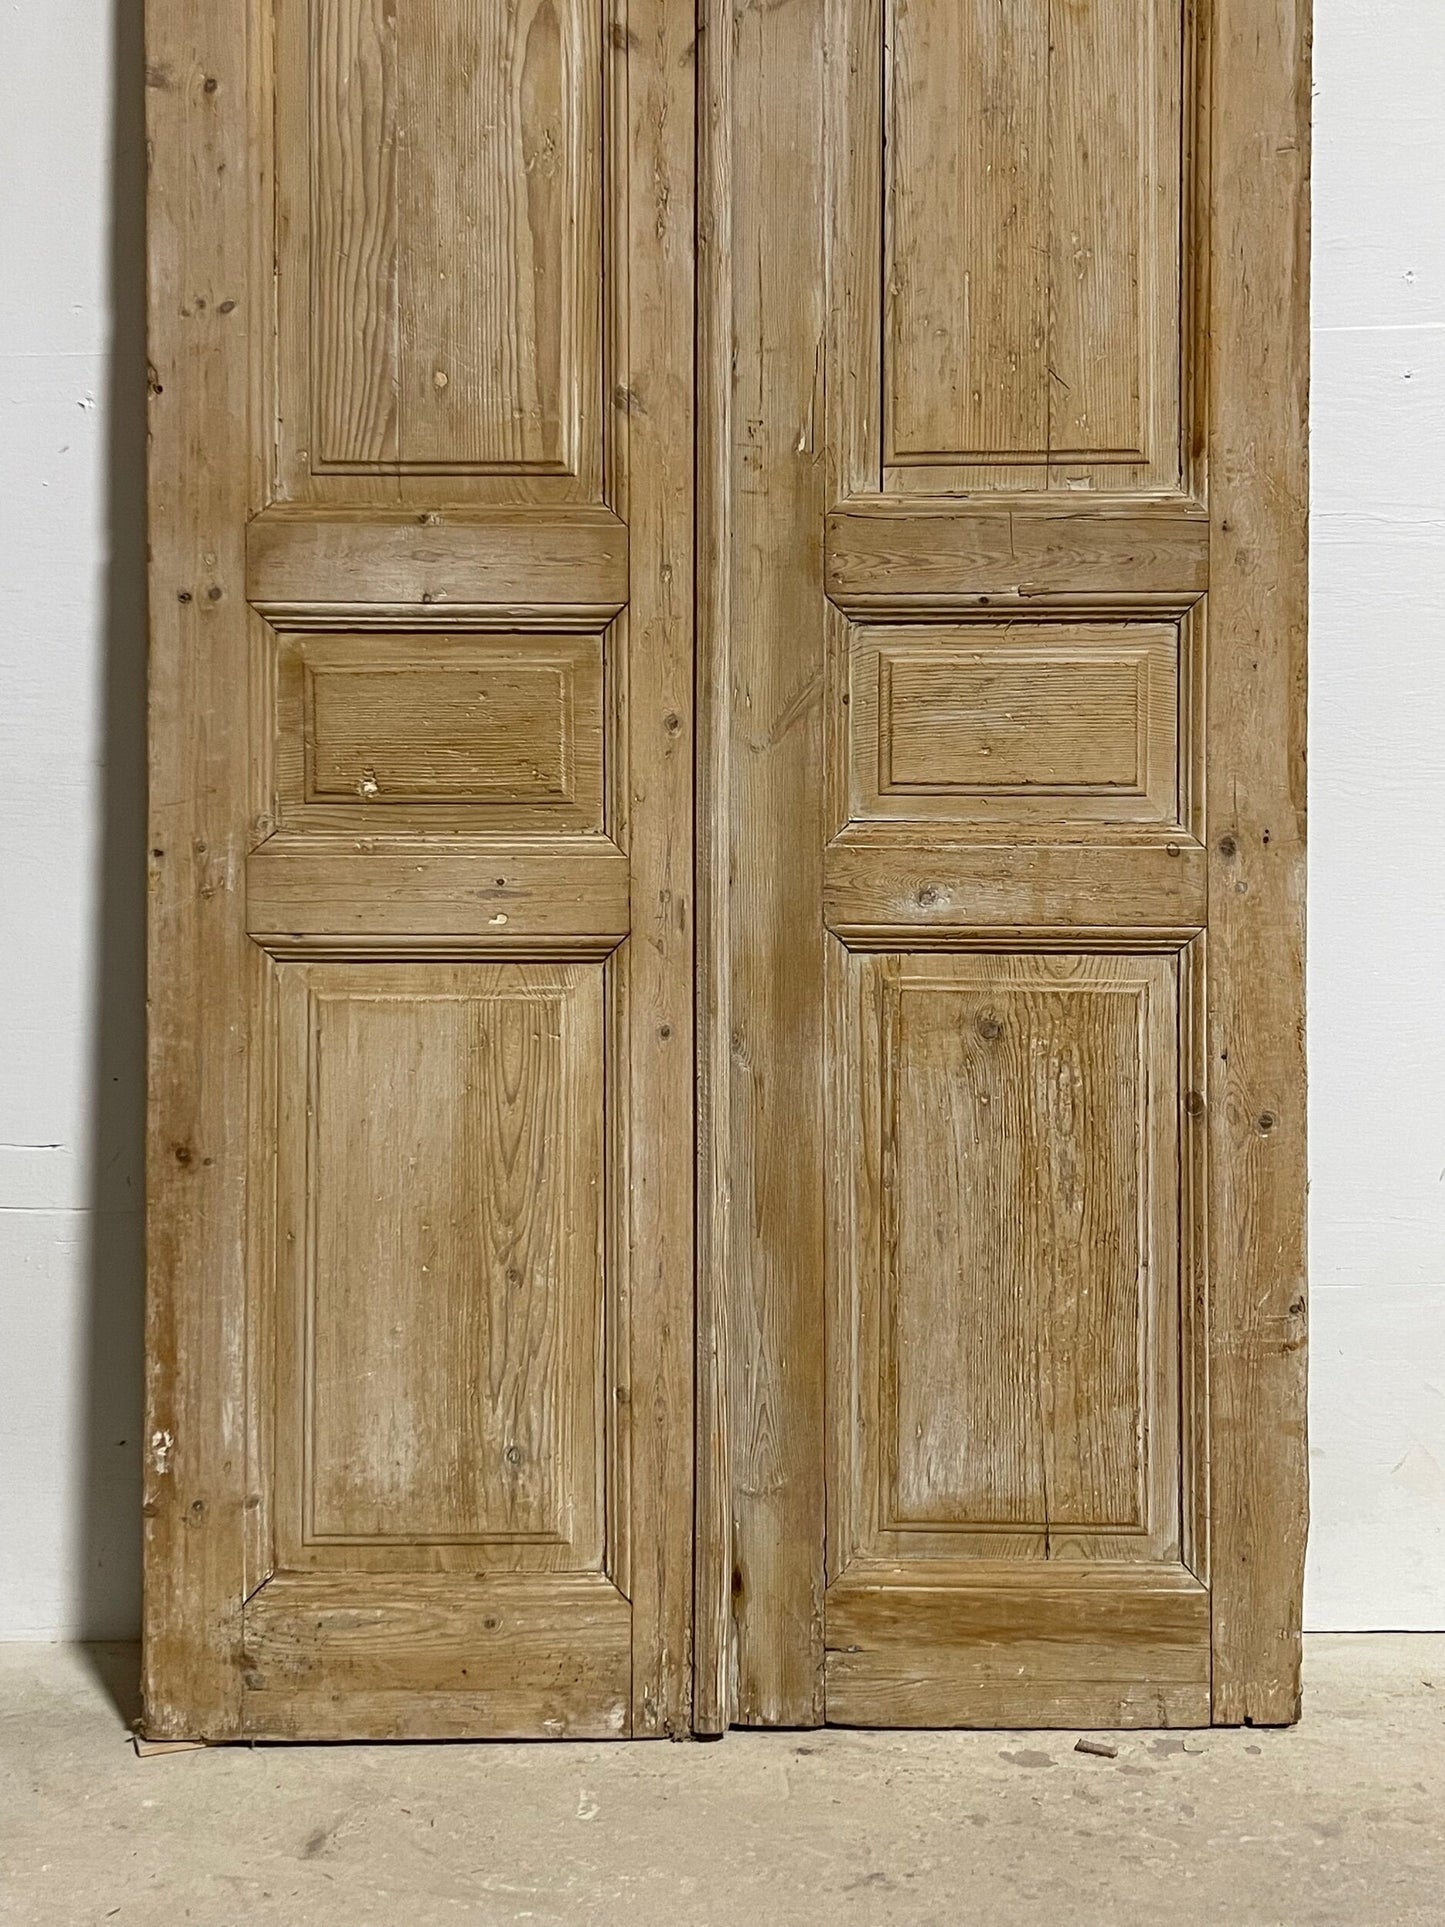 Antique French panel doors (93.25x39.5) I154